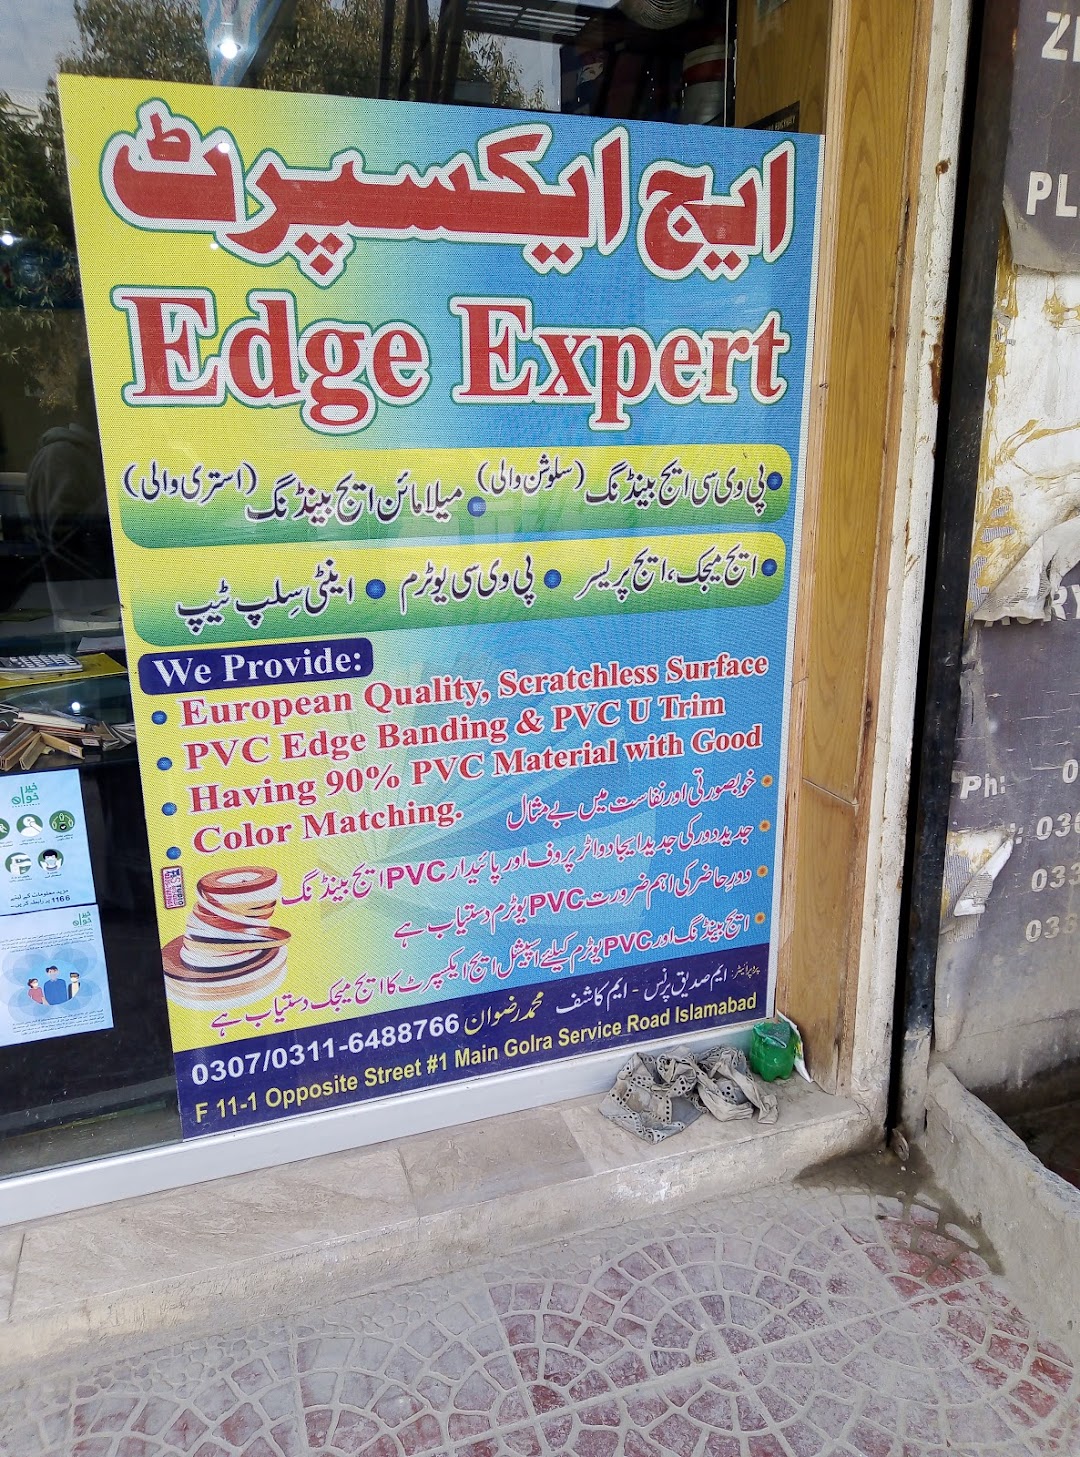 Edge Expert Islamabad